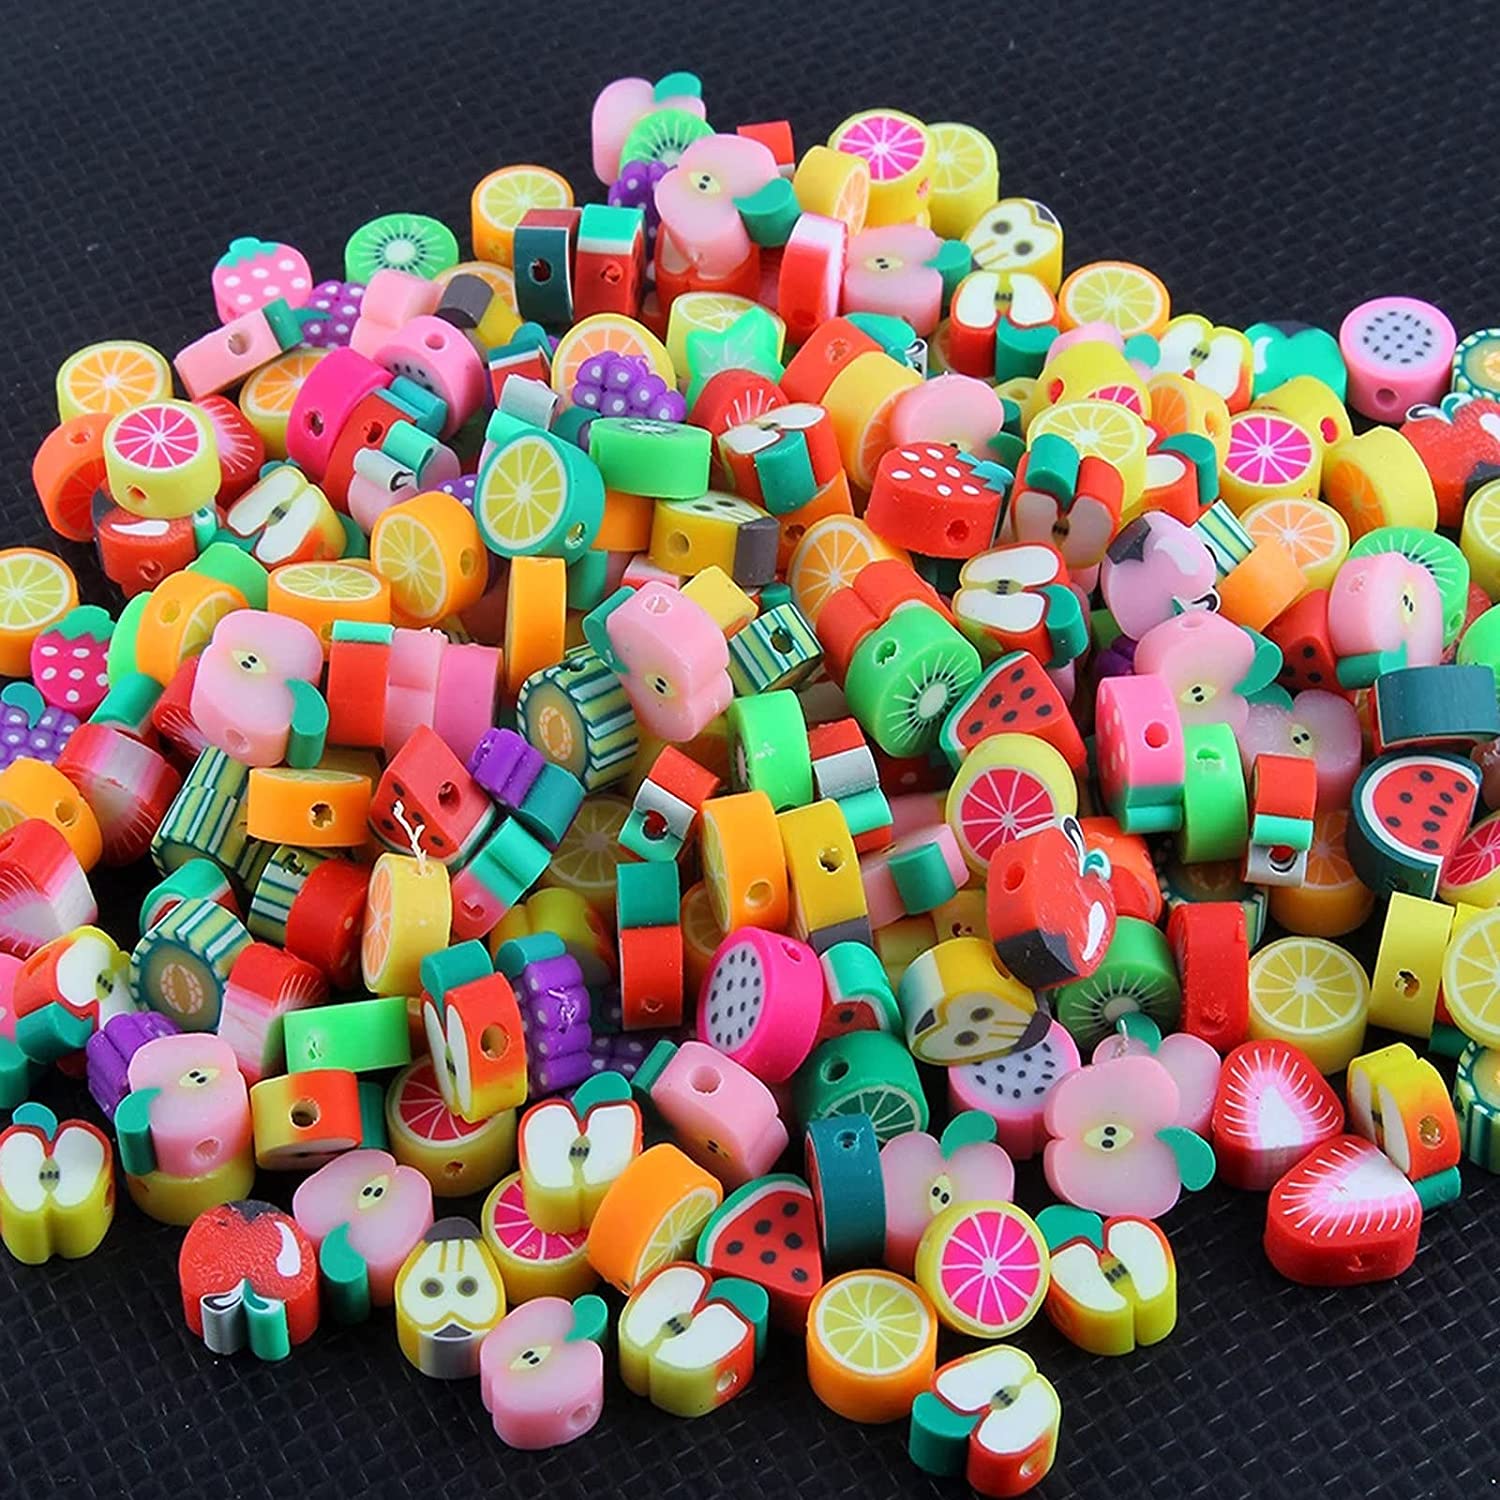  Junkin 3960 Pieces Polymer Clay Beads Flat Heishi